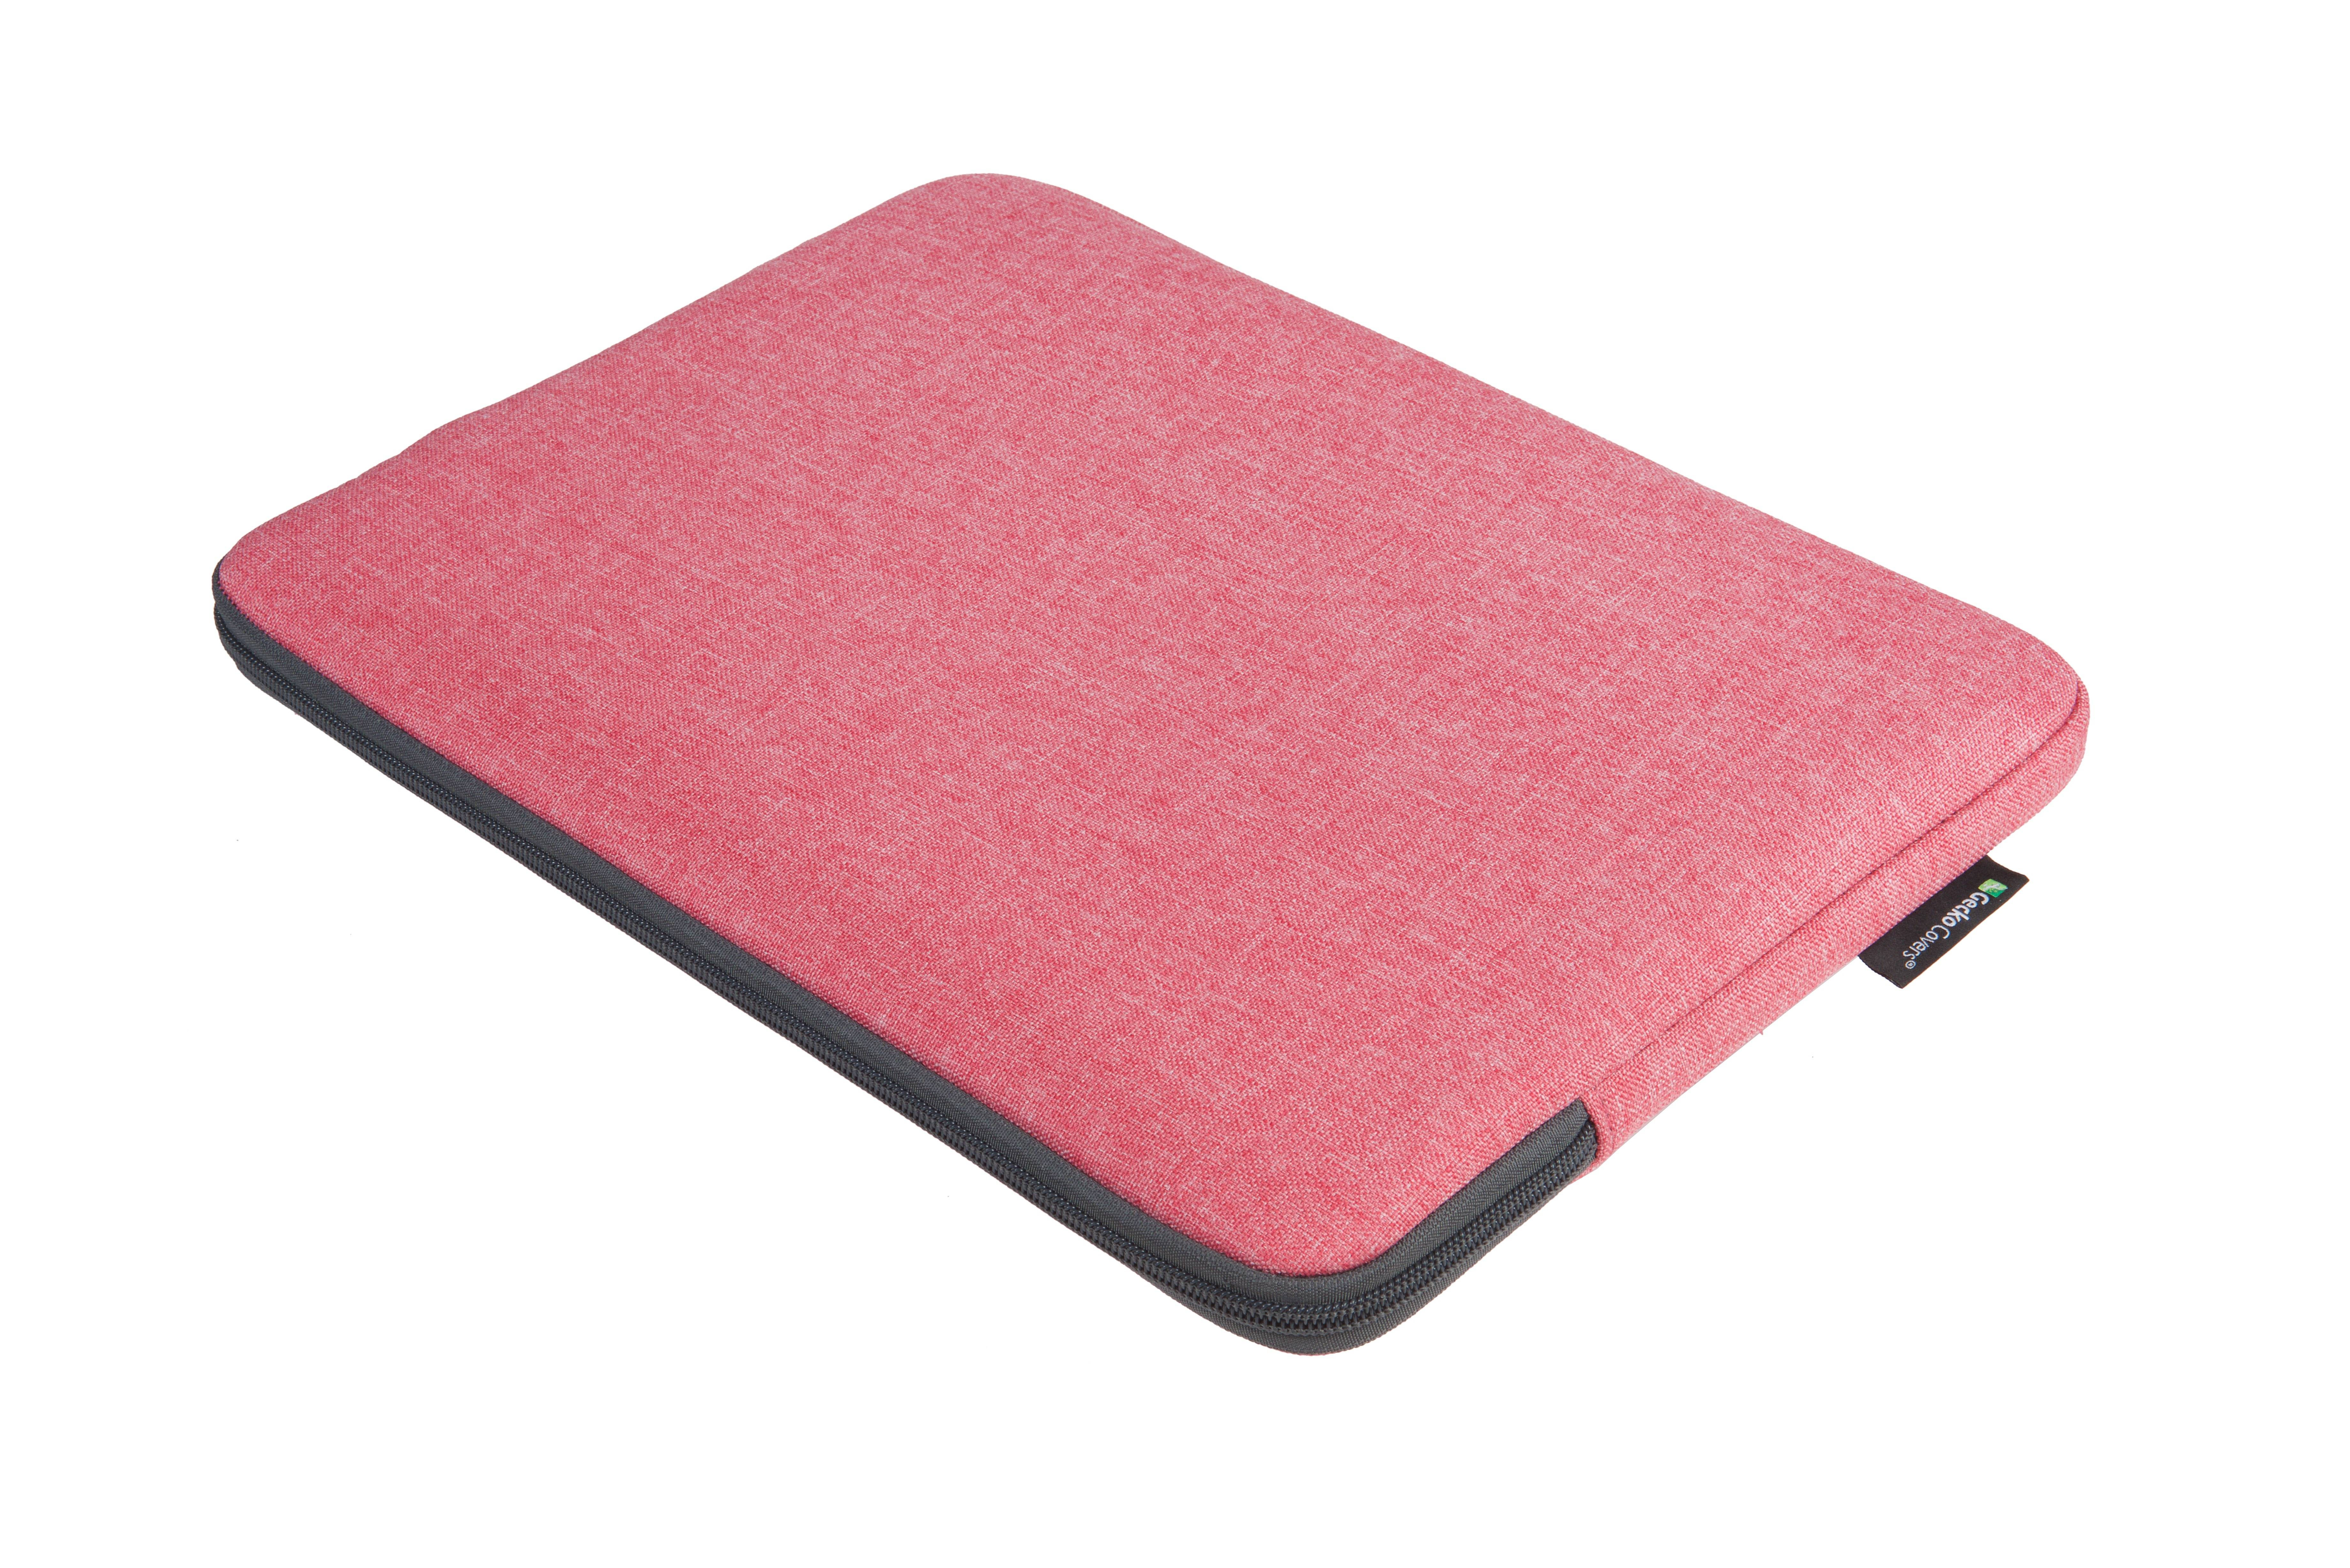 GECKO COVERS Notebooktasche Sleeve für Sleeve Zipper MSI, Universal Fabric, Apple, Dell, Acer, Rosa HP, Asus, Lenovo, Razer